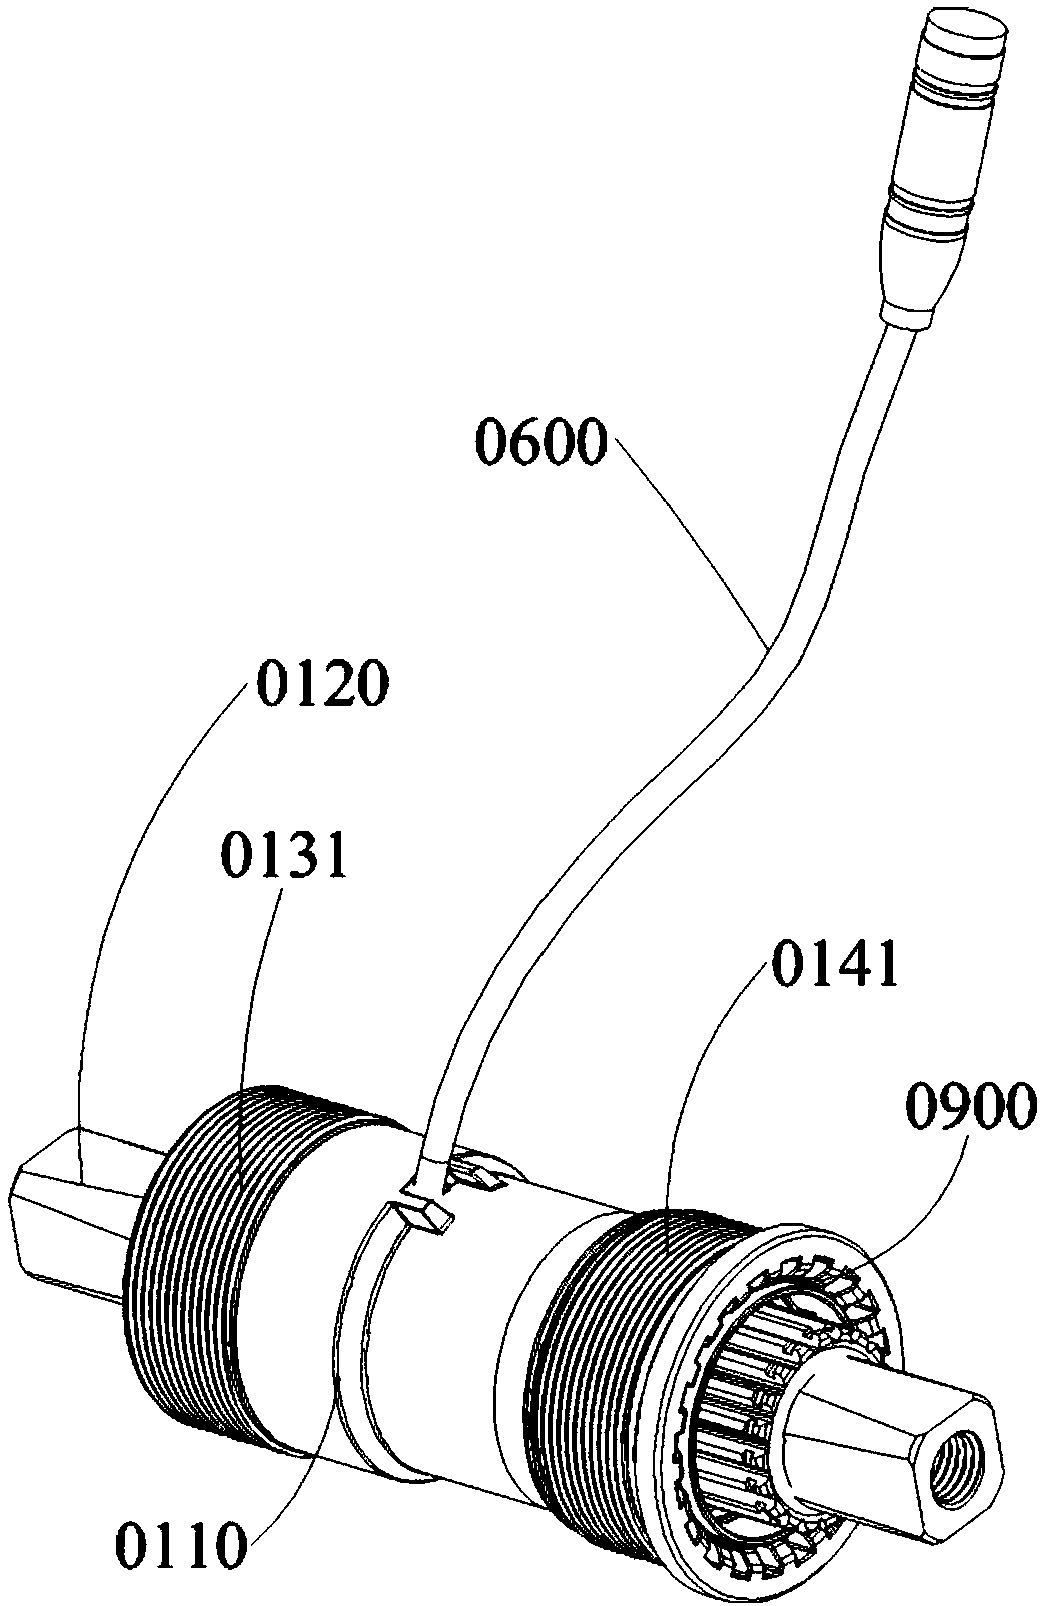 Inverse-magnetostrictive central axle torque sensor